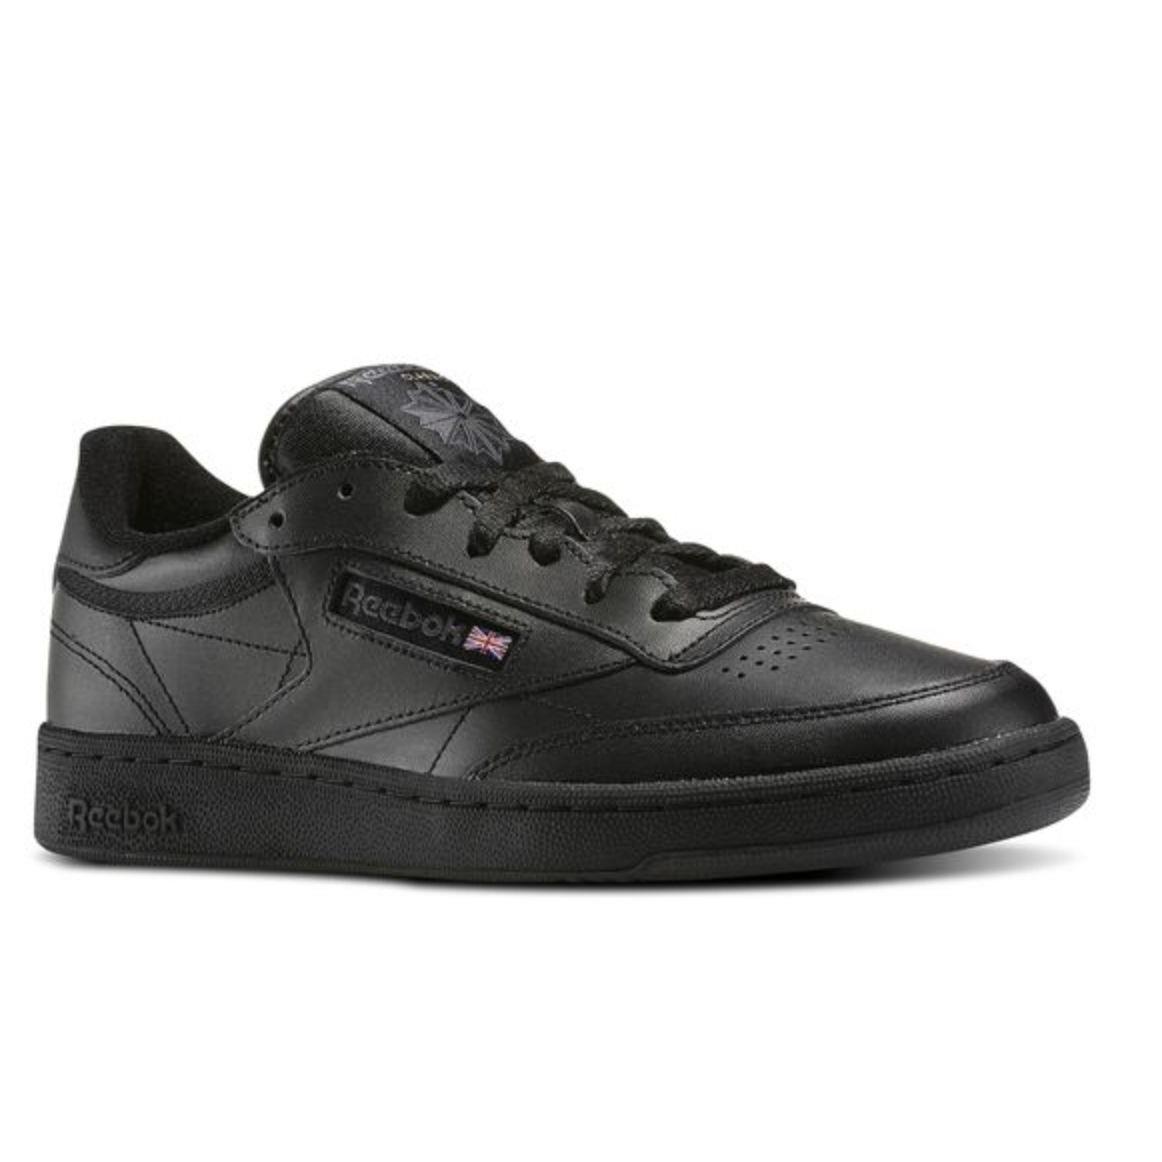 Reebok Club C 85 AR0454 Black/charcoal Leather Casual Men Shoes